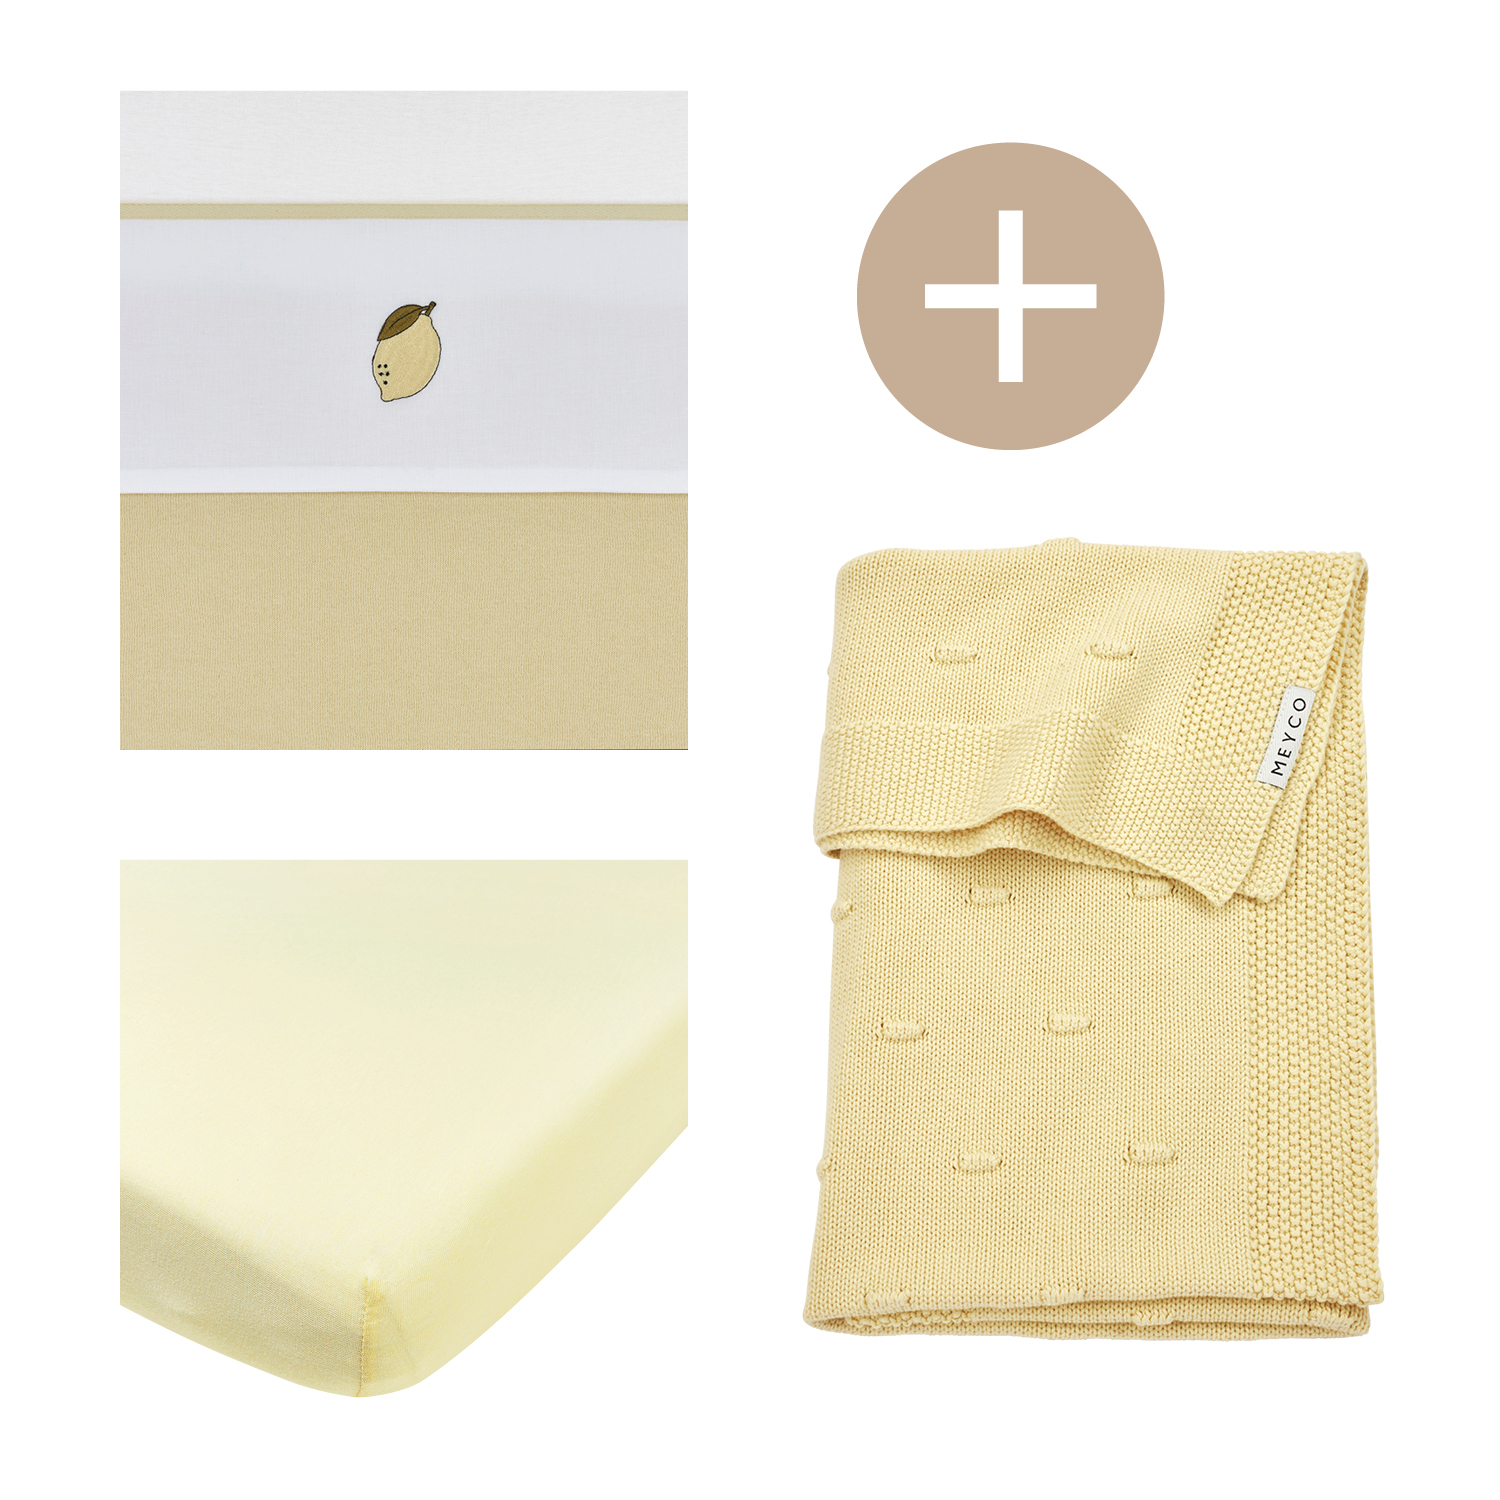 Ledikant deken + ledikant laken + hoeslaken ledikant Knots - soft yellow - 100x150cm